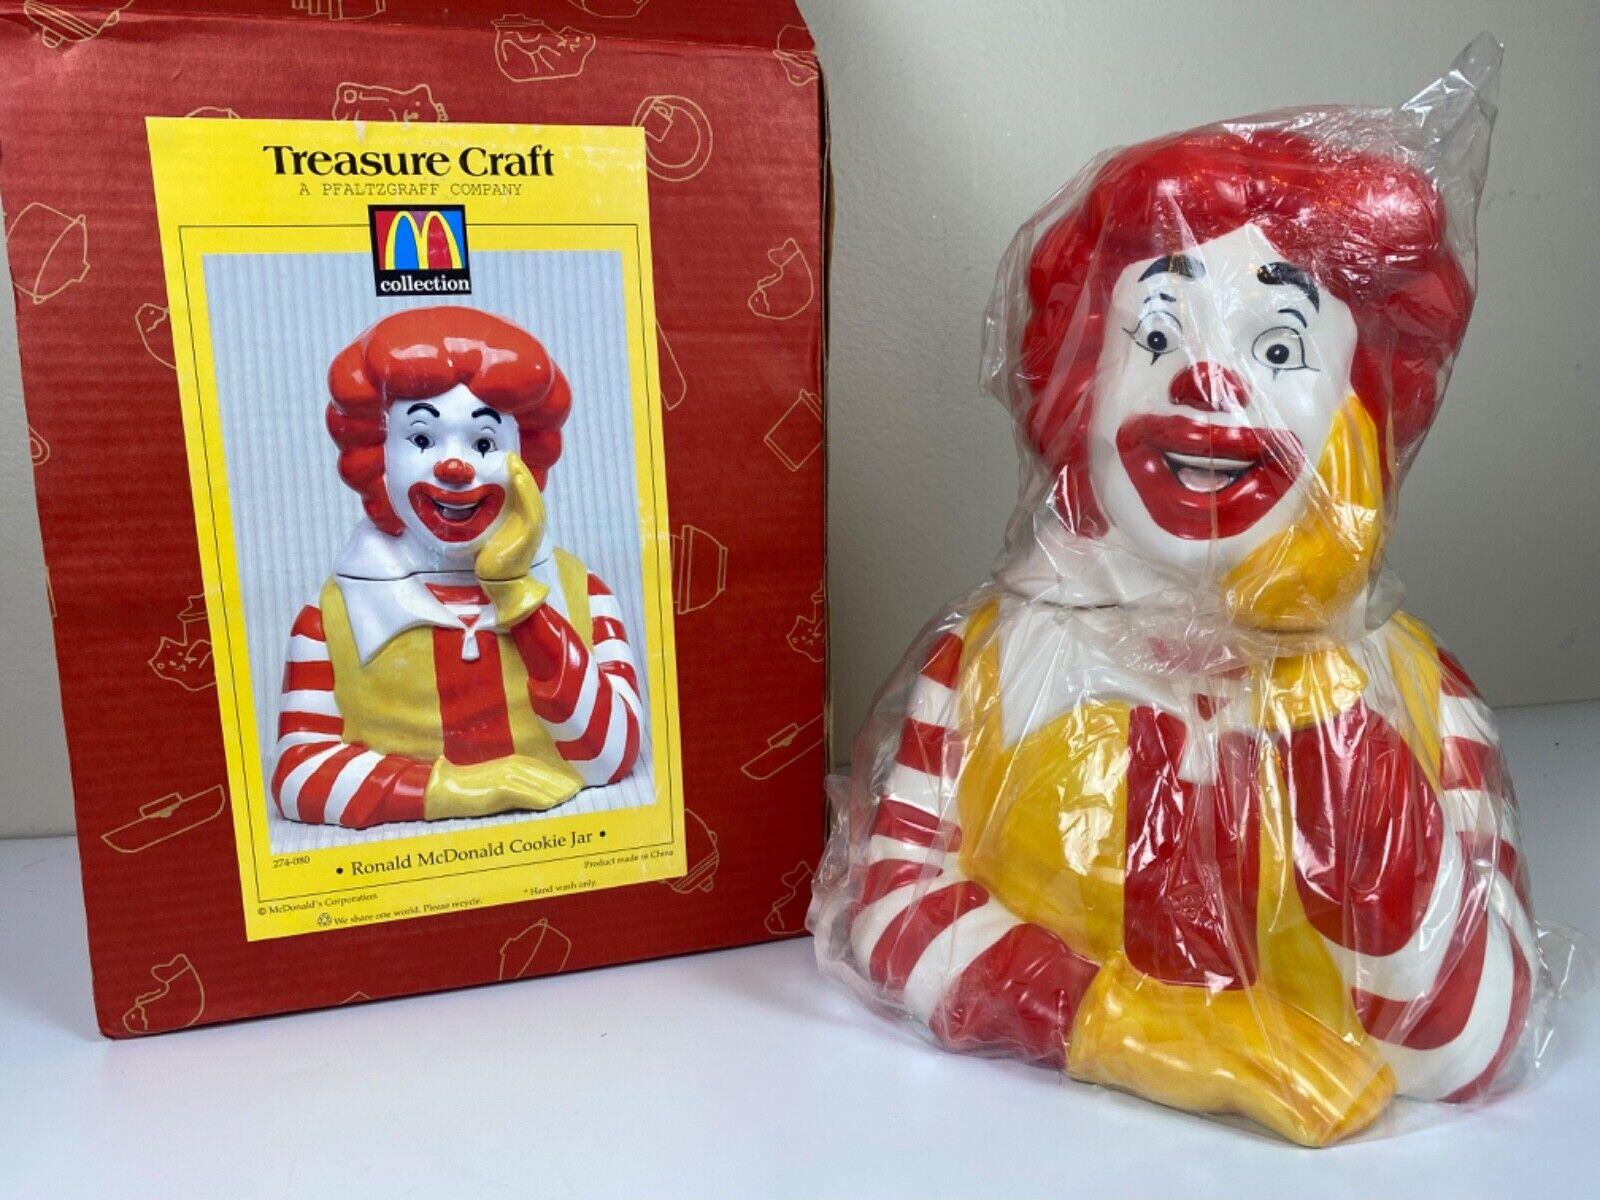 Ronald McDonald Cookie Jar Treasure Craft McDonalds NOS Vintage 1997 Pfaltzgraff